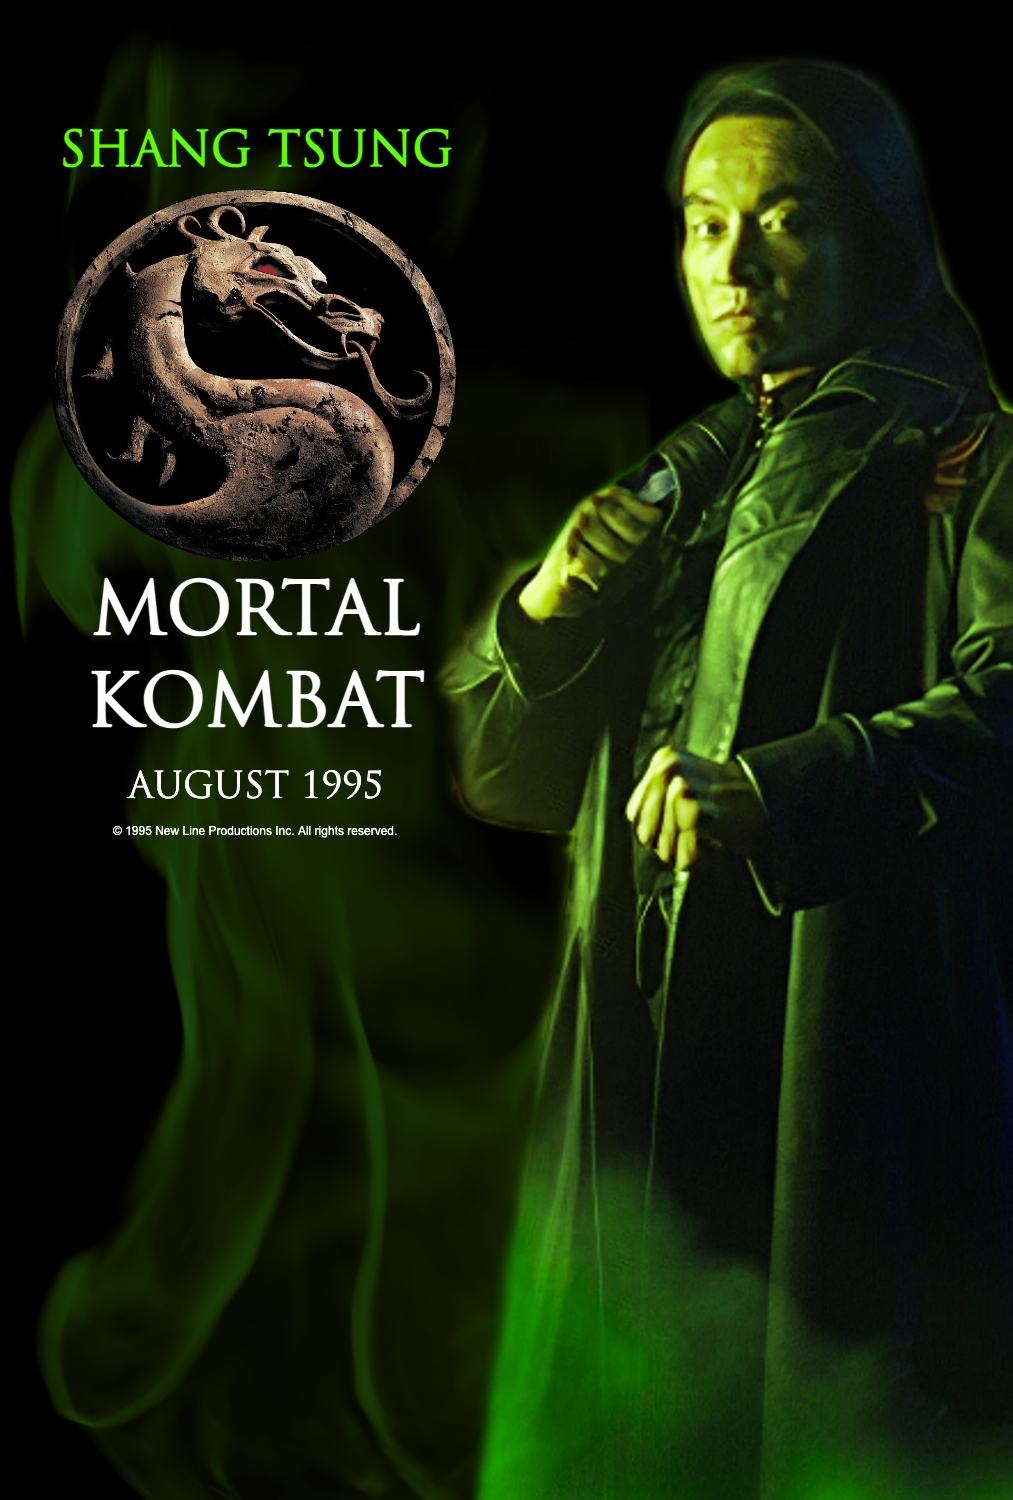 Mortal Kombat 1 Shang Tsung by CARGOCAMP on DeviantArt